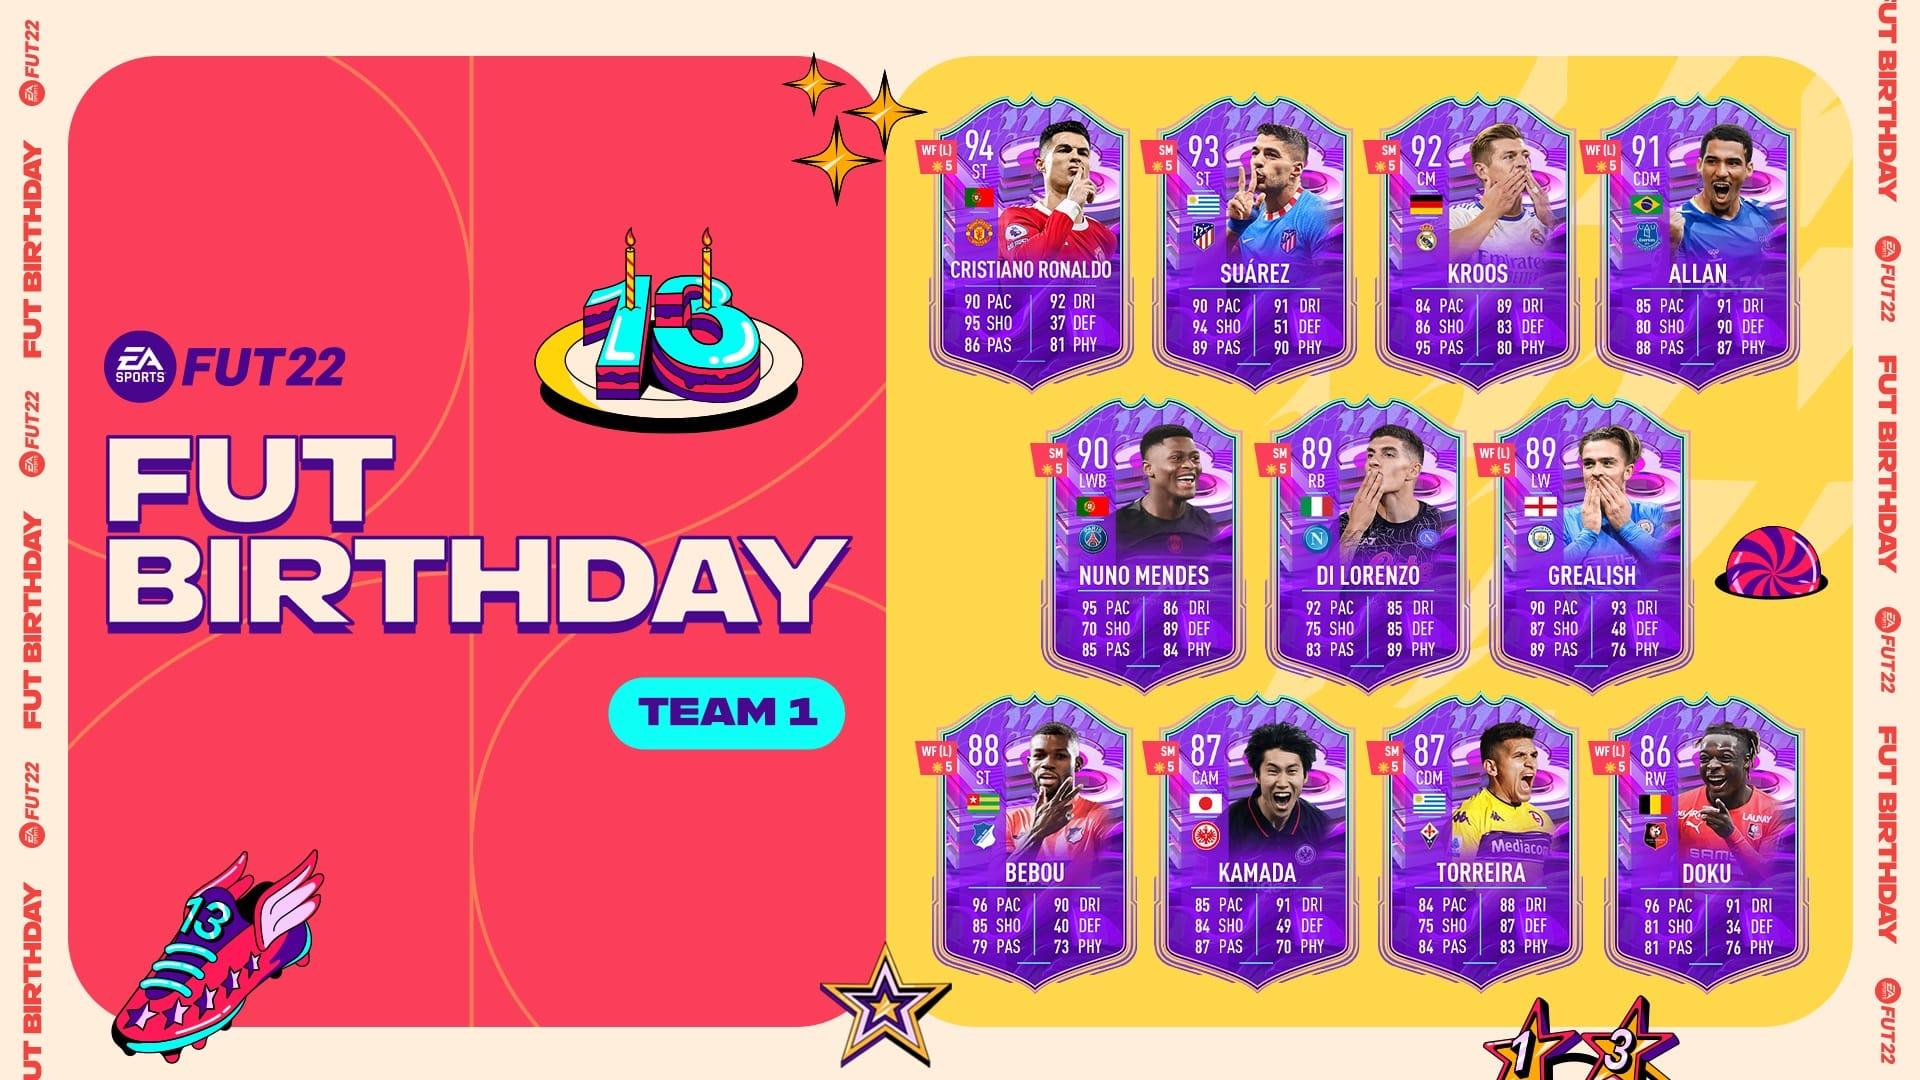 FIFA 22 FUT Birthday Team 1 cards